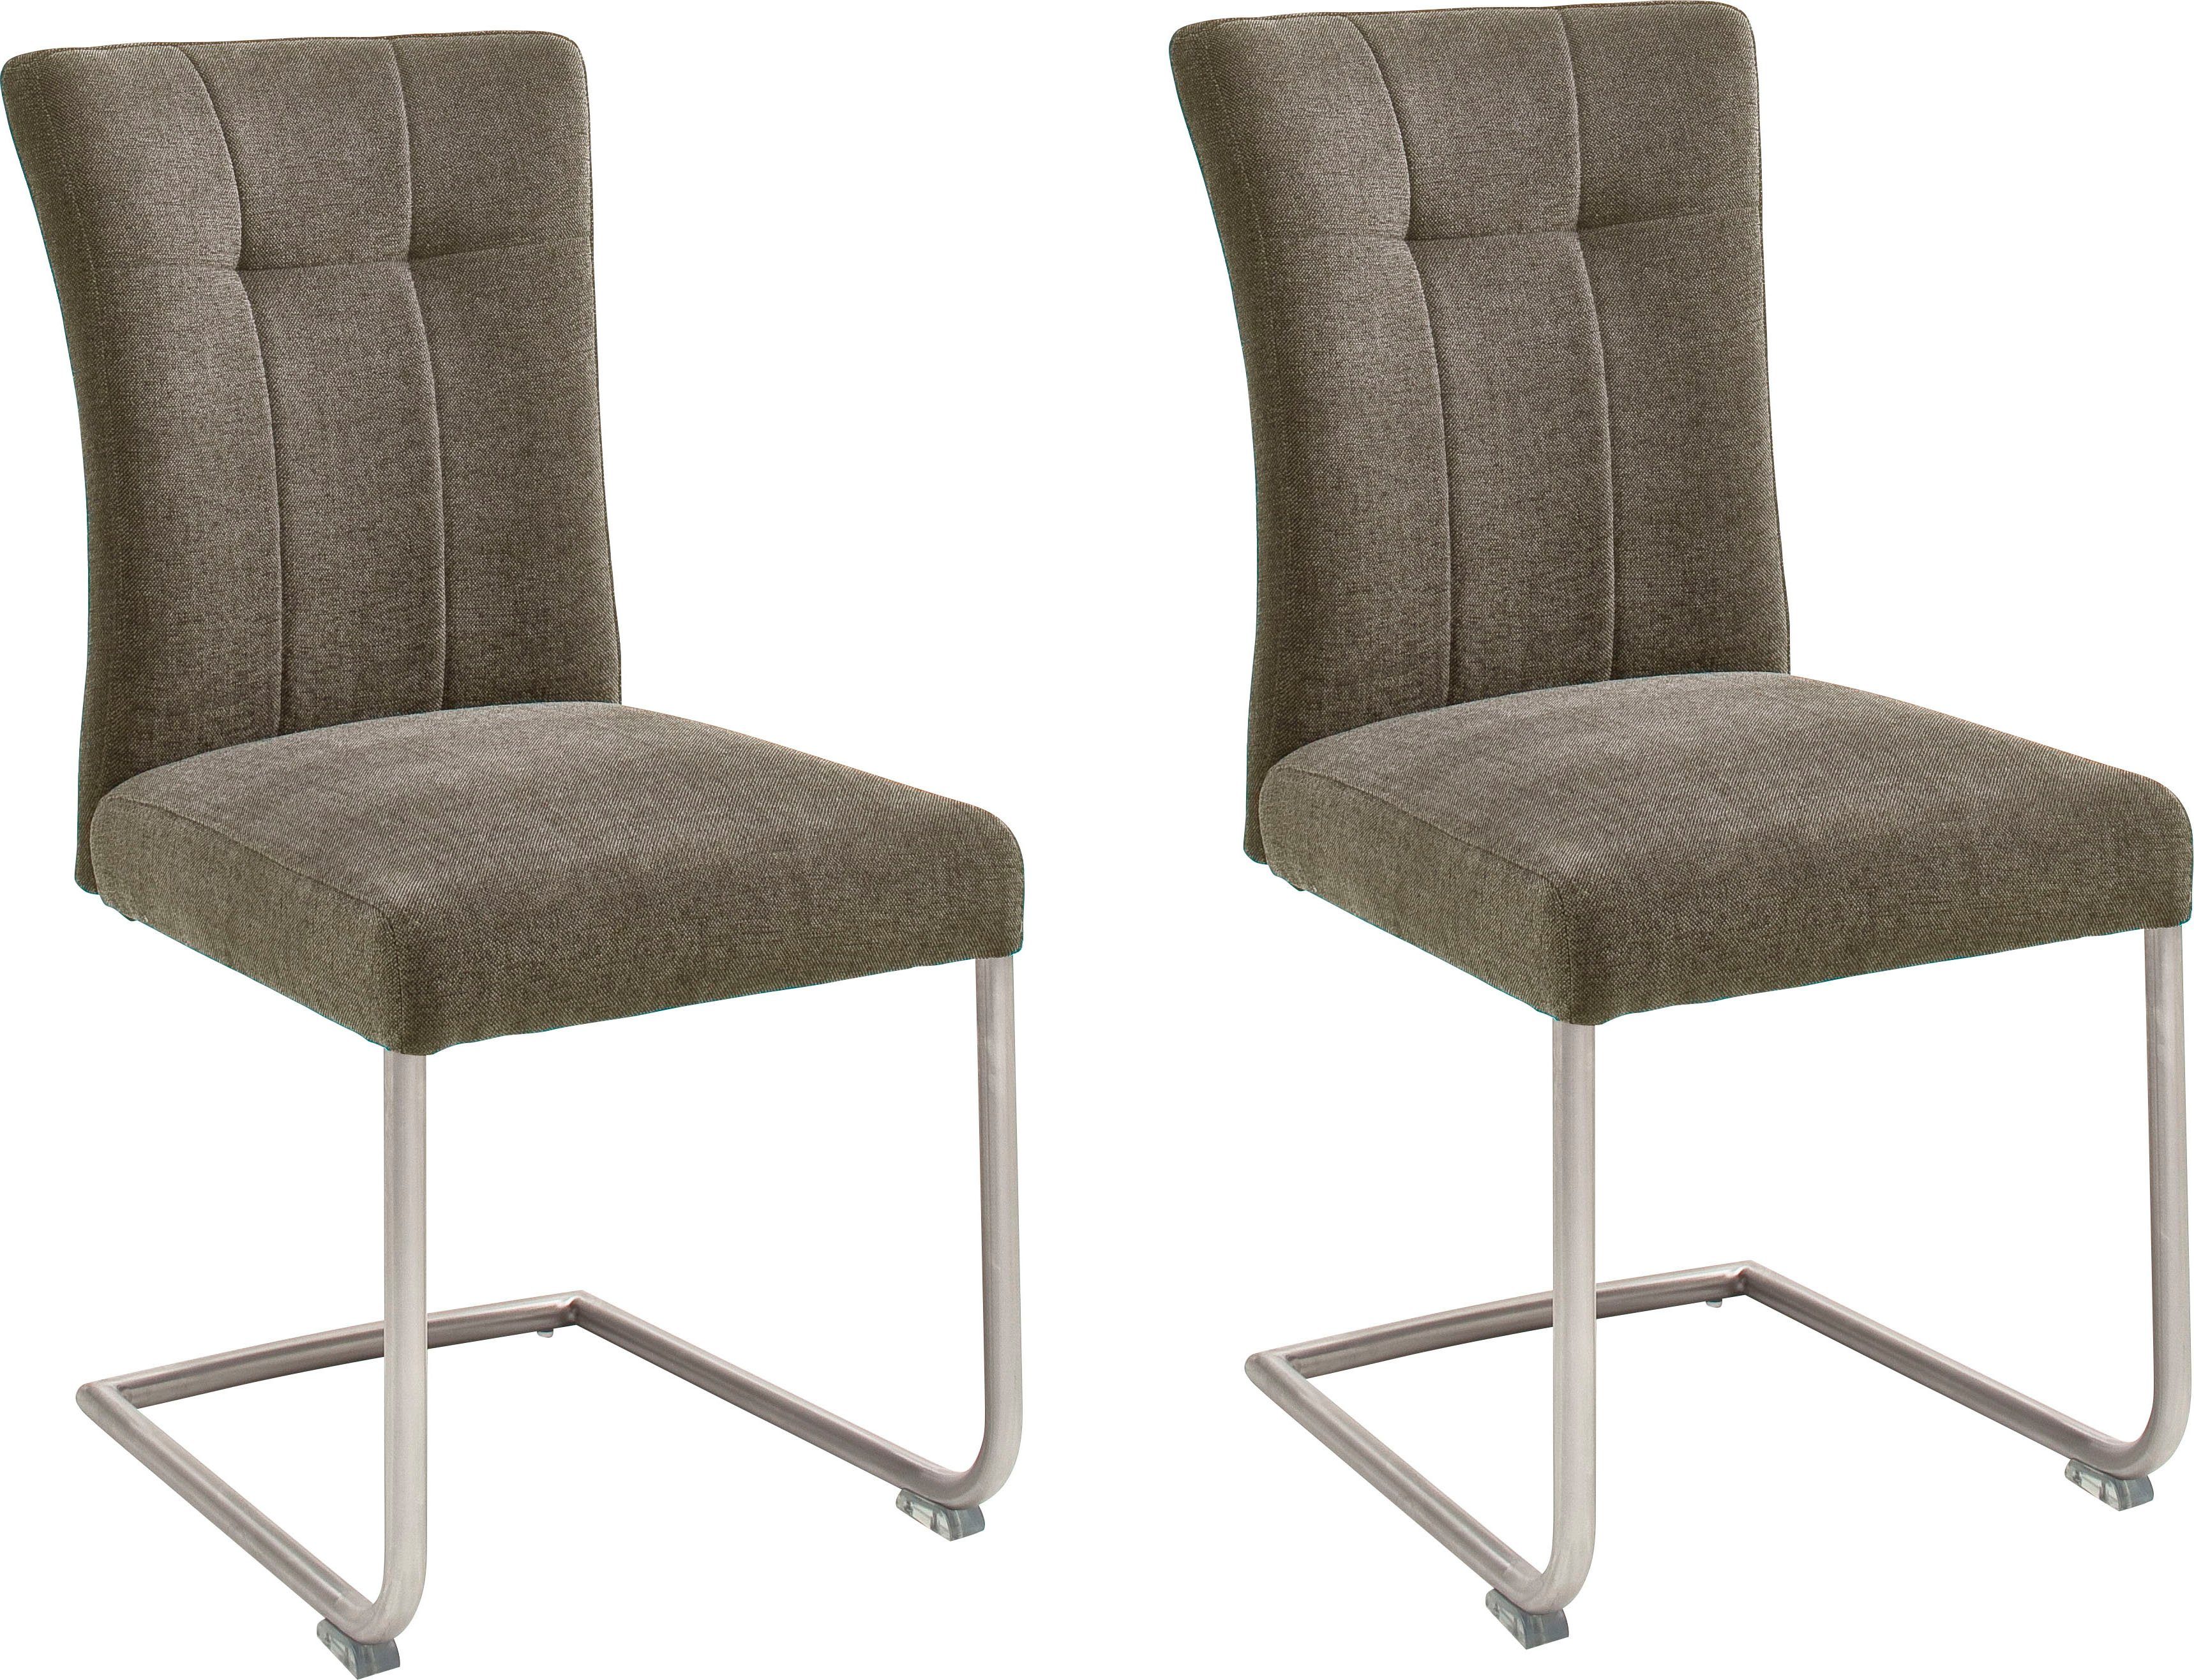 MCA furniture Vrijdragende stoel Calanda Eetkamerstoel aqua clean bekleding, nosag vering, belastbaar tot 120 kg (set, 2 stuks)